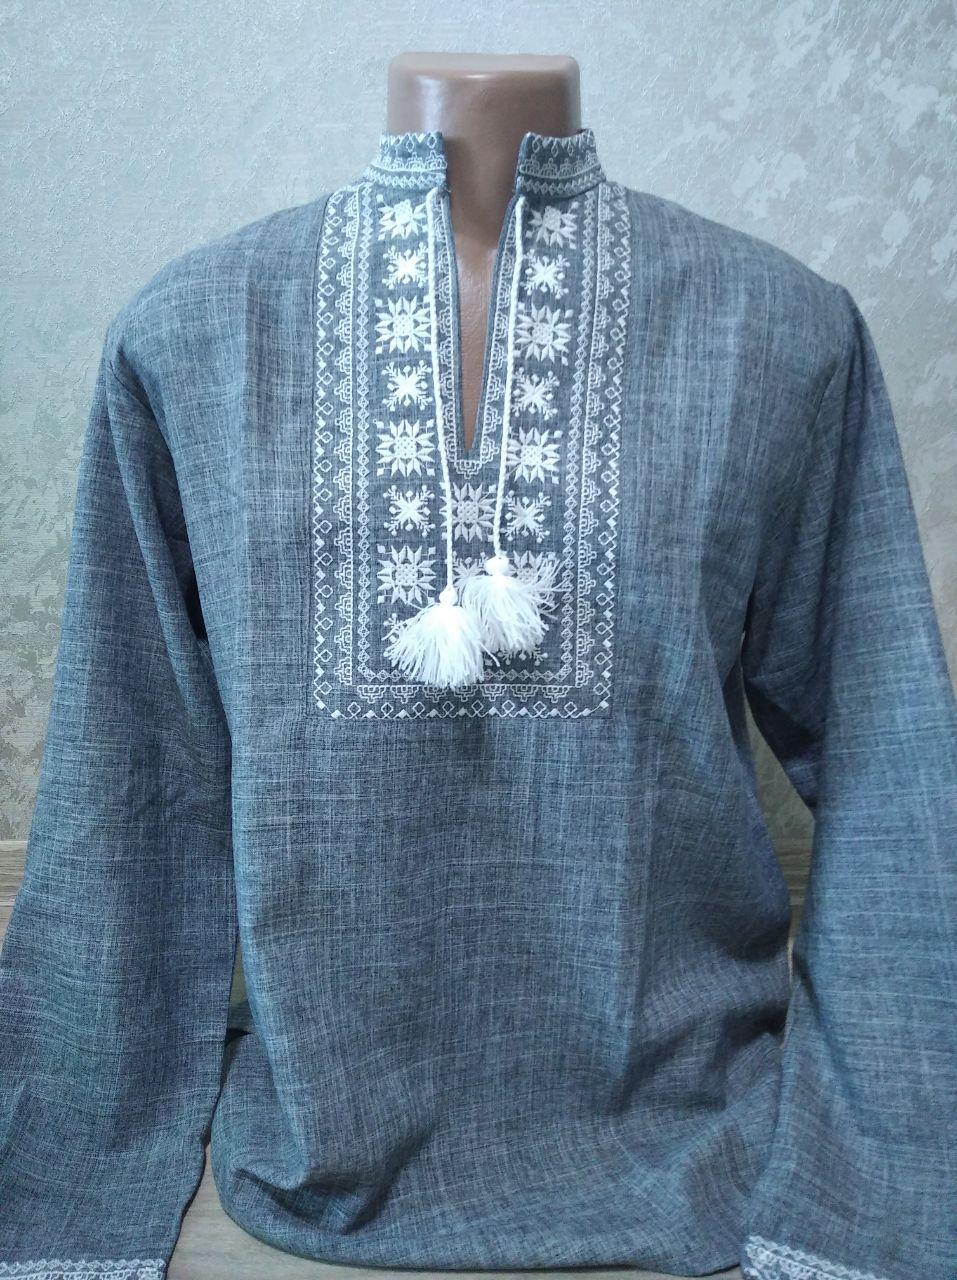 Мужская вышиванка серая с белой вышивкой - размер M (46)